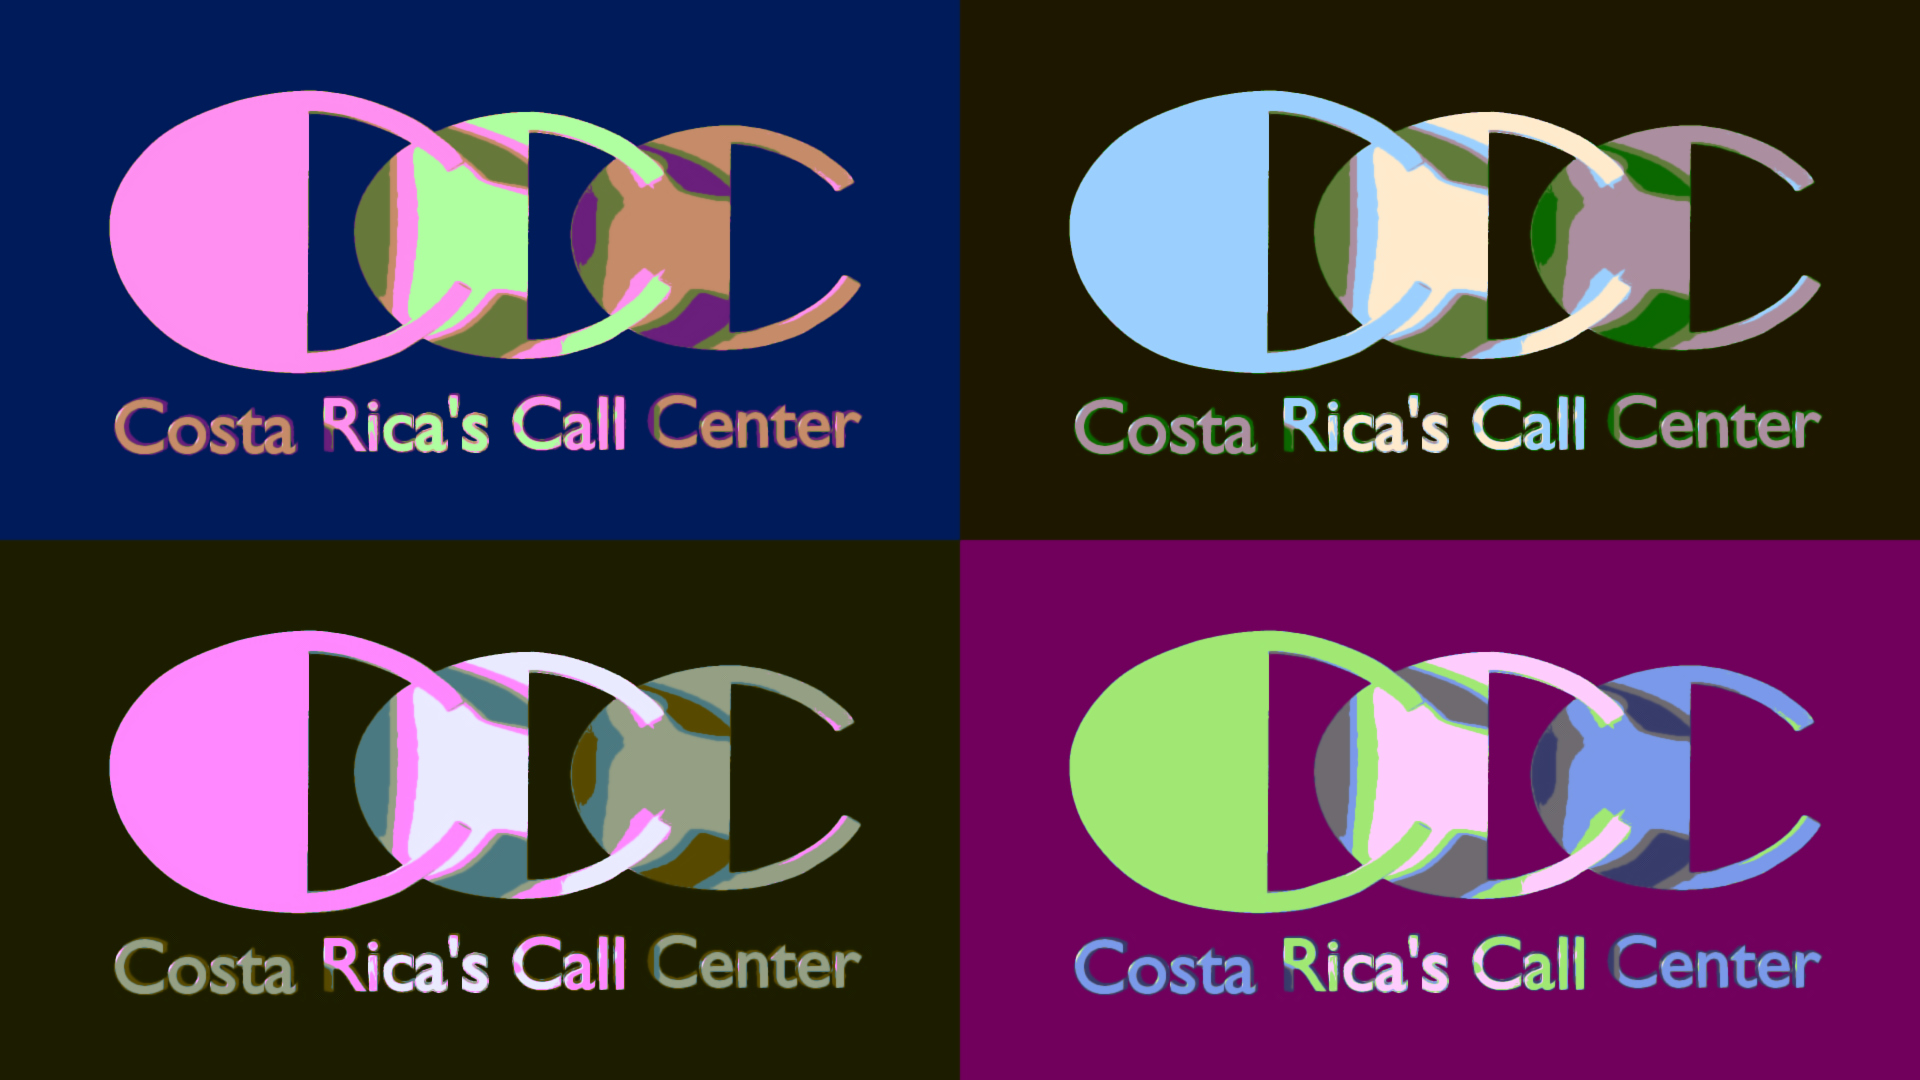 COLD CALL DIALER SYSTEM COSTA RICA.jpg  by richardblank